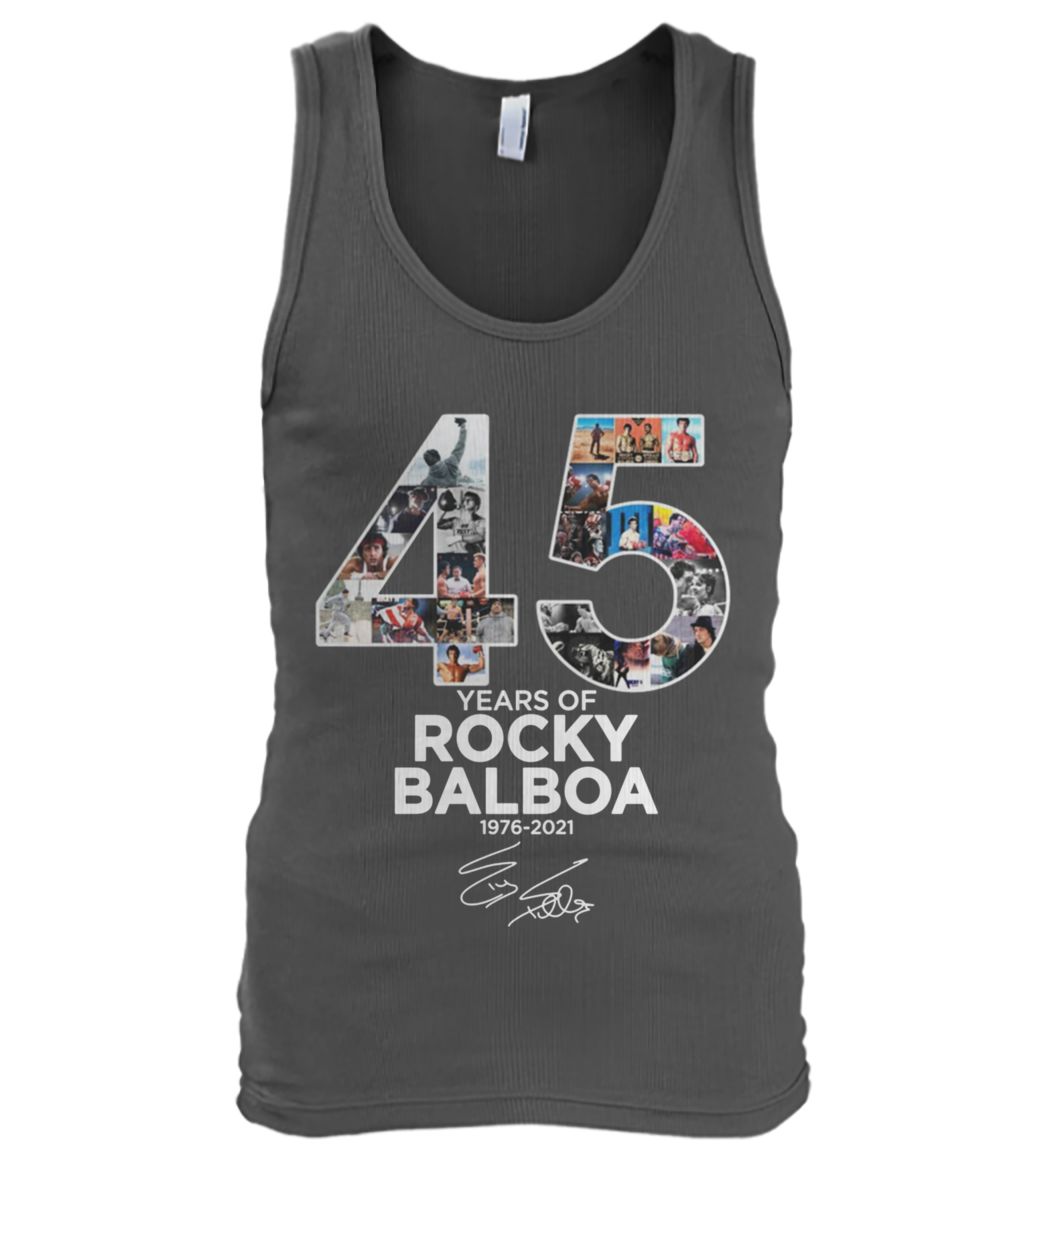 45 years of Rocky Balboa 1976-2021 signature men's tank top